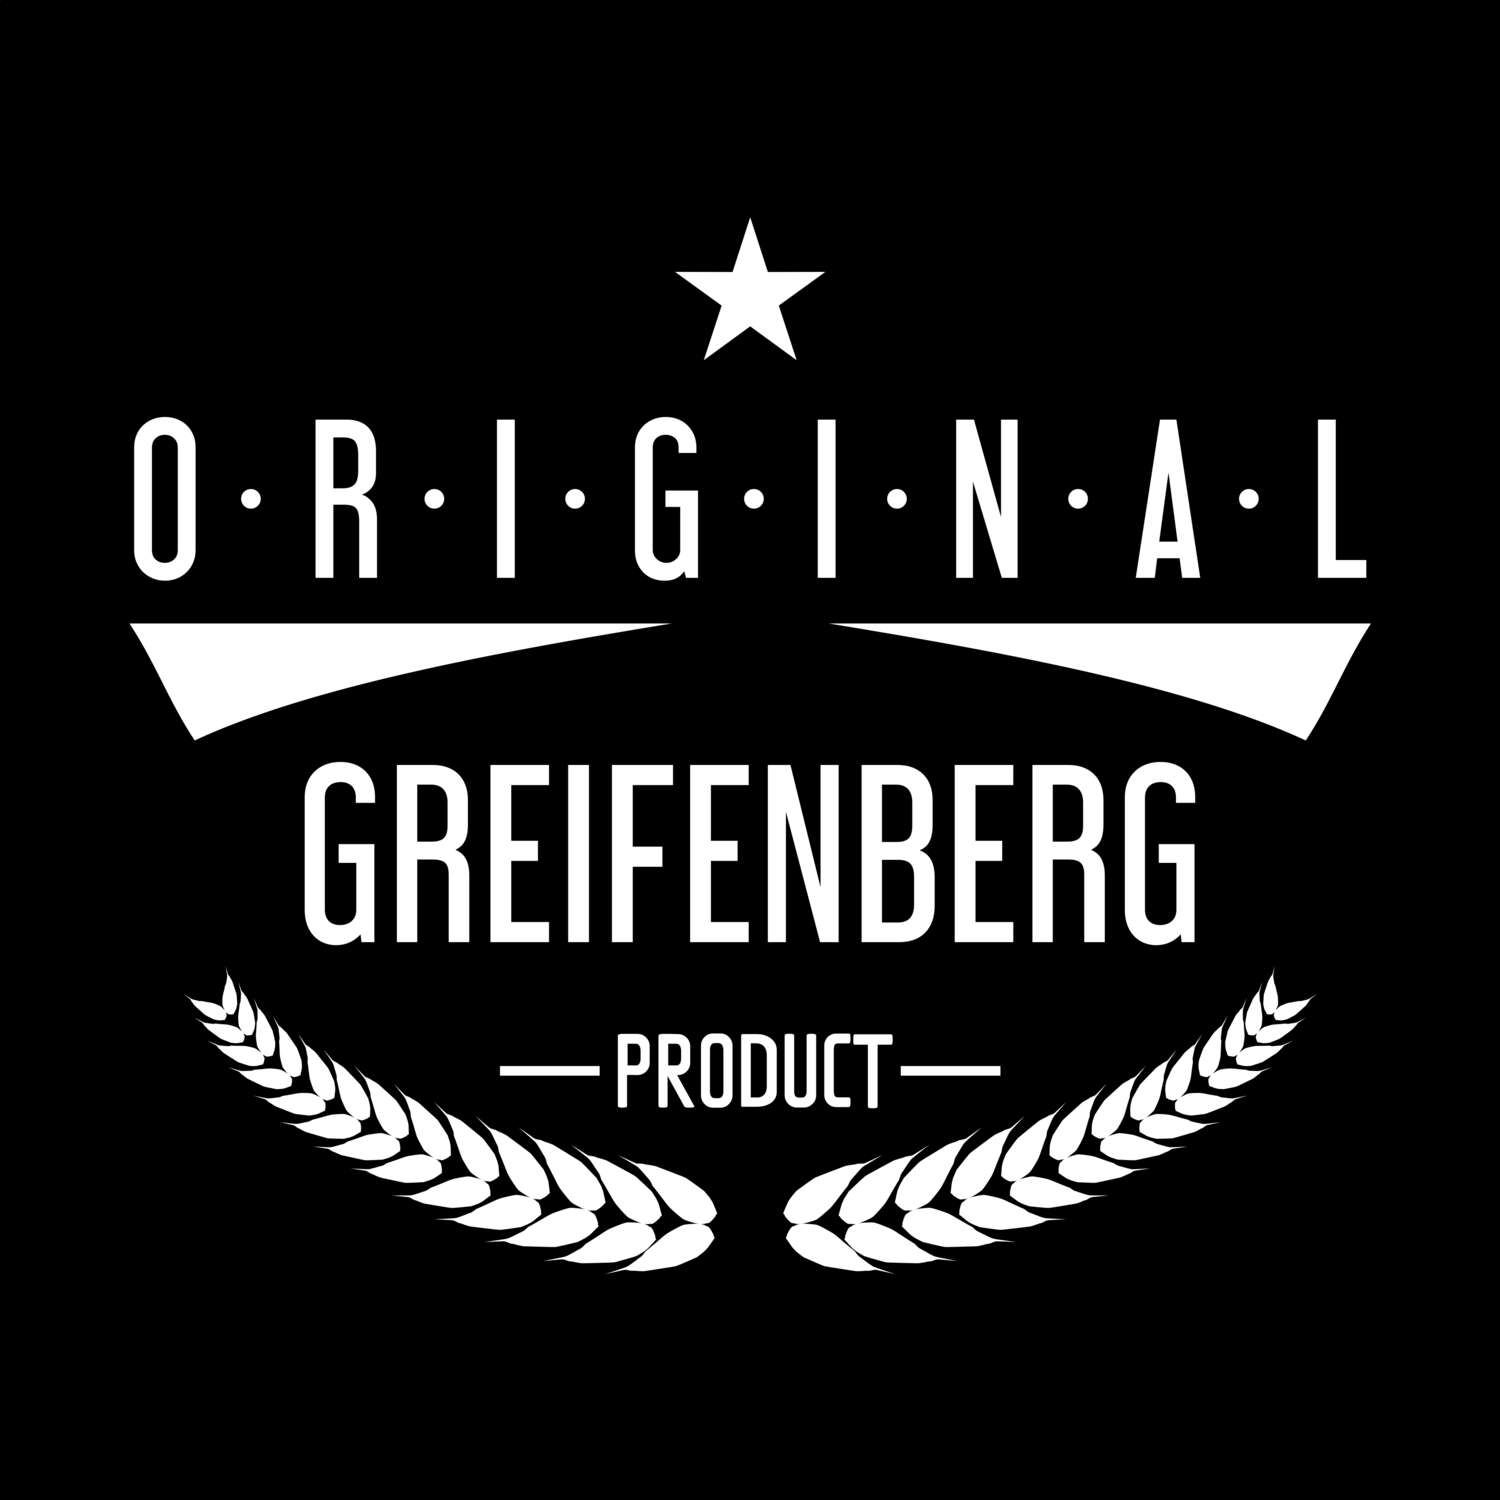 Greifenberg T-Shirt »Original Product«